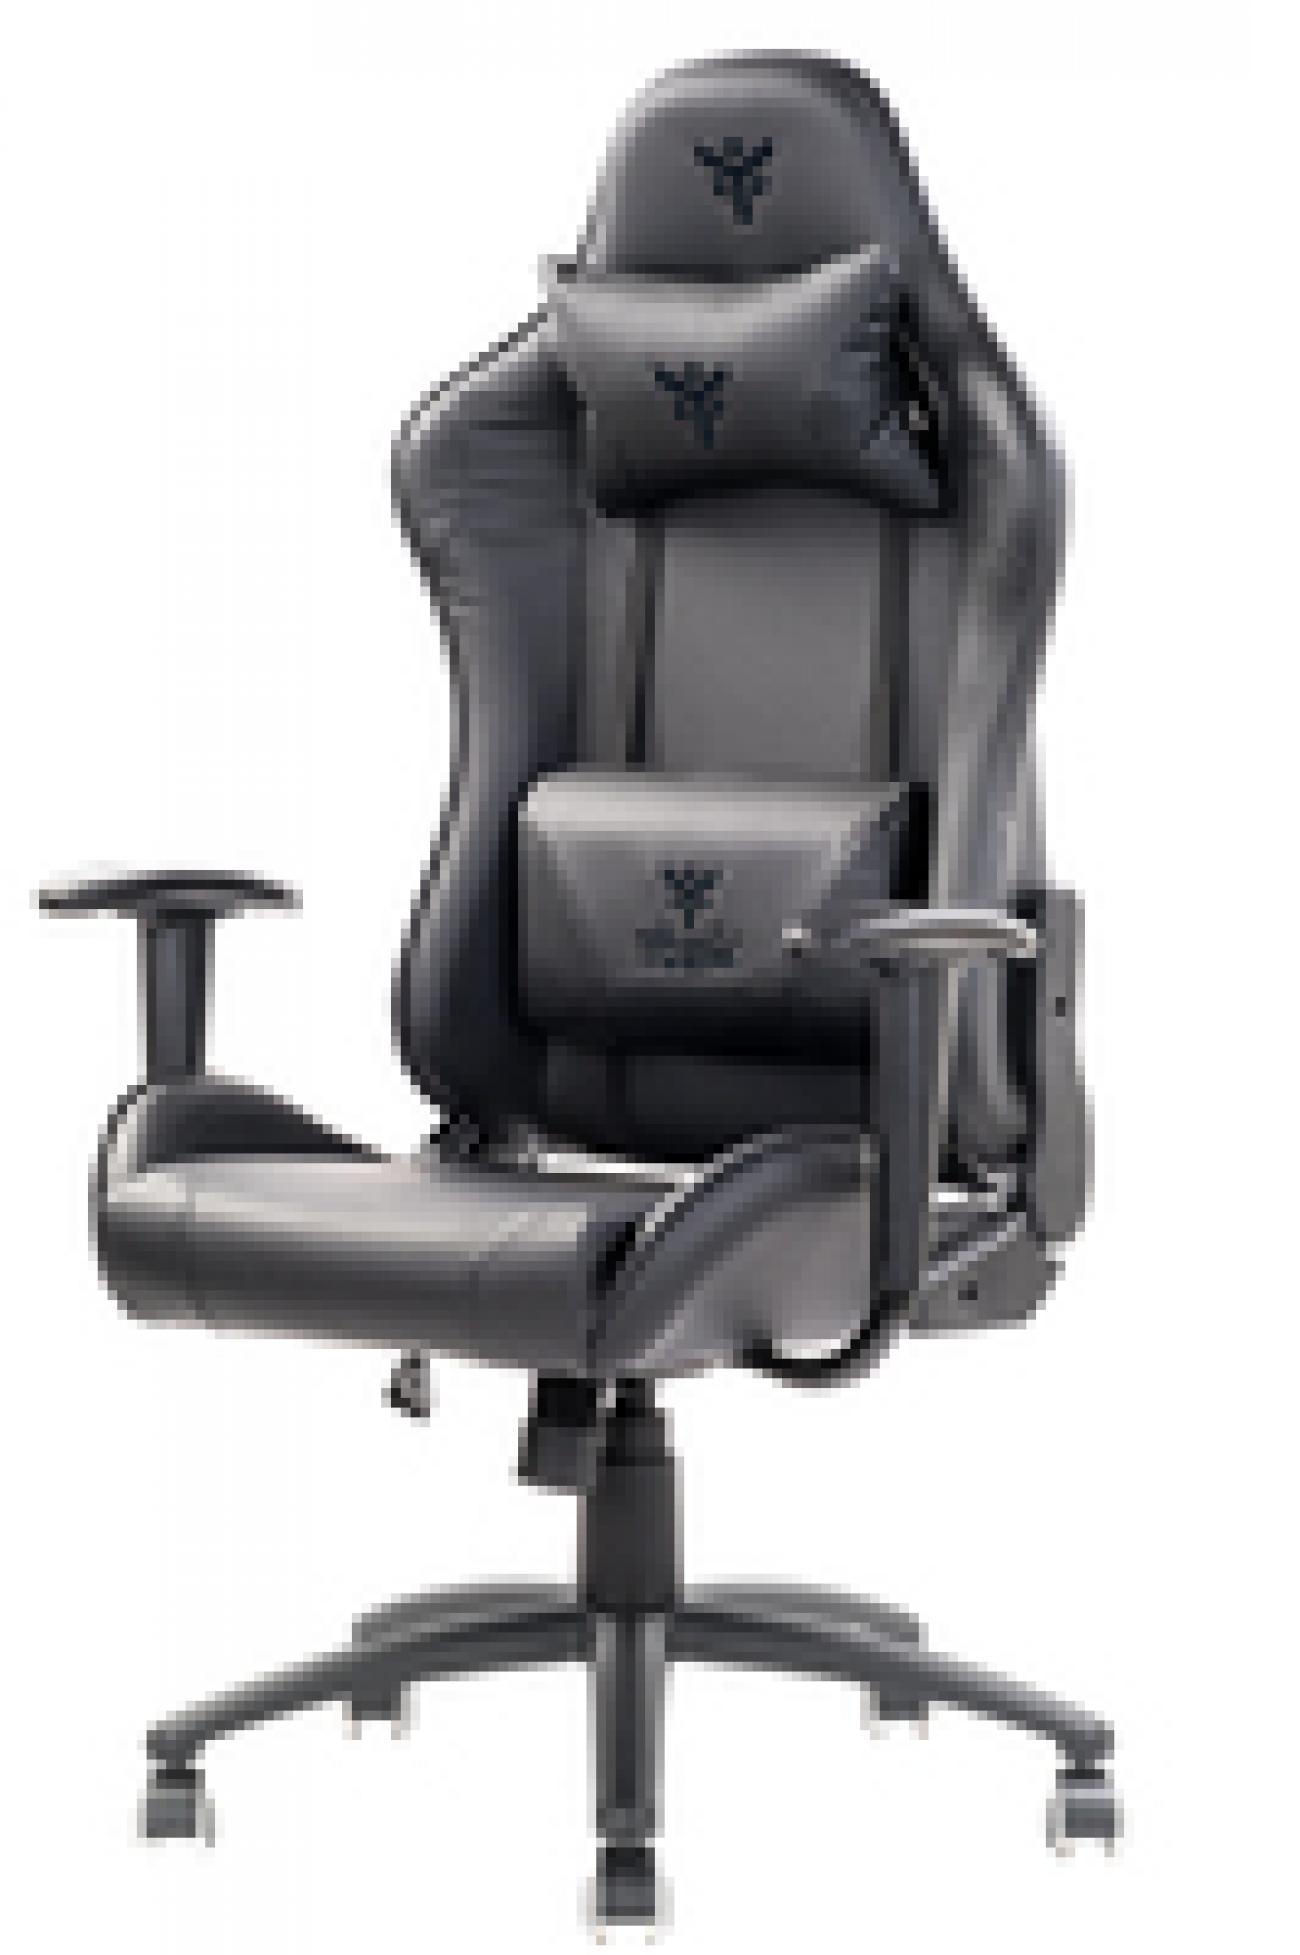 itek Gaming Chair PLAYCOM PM20 - PVC, Doppio Cuscino, Schienale Reclinabile, Nero Nero